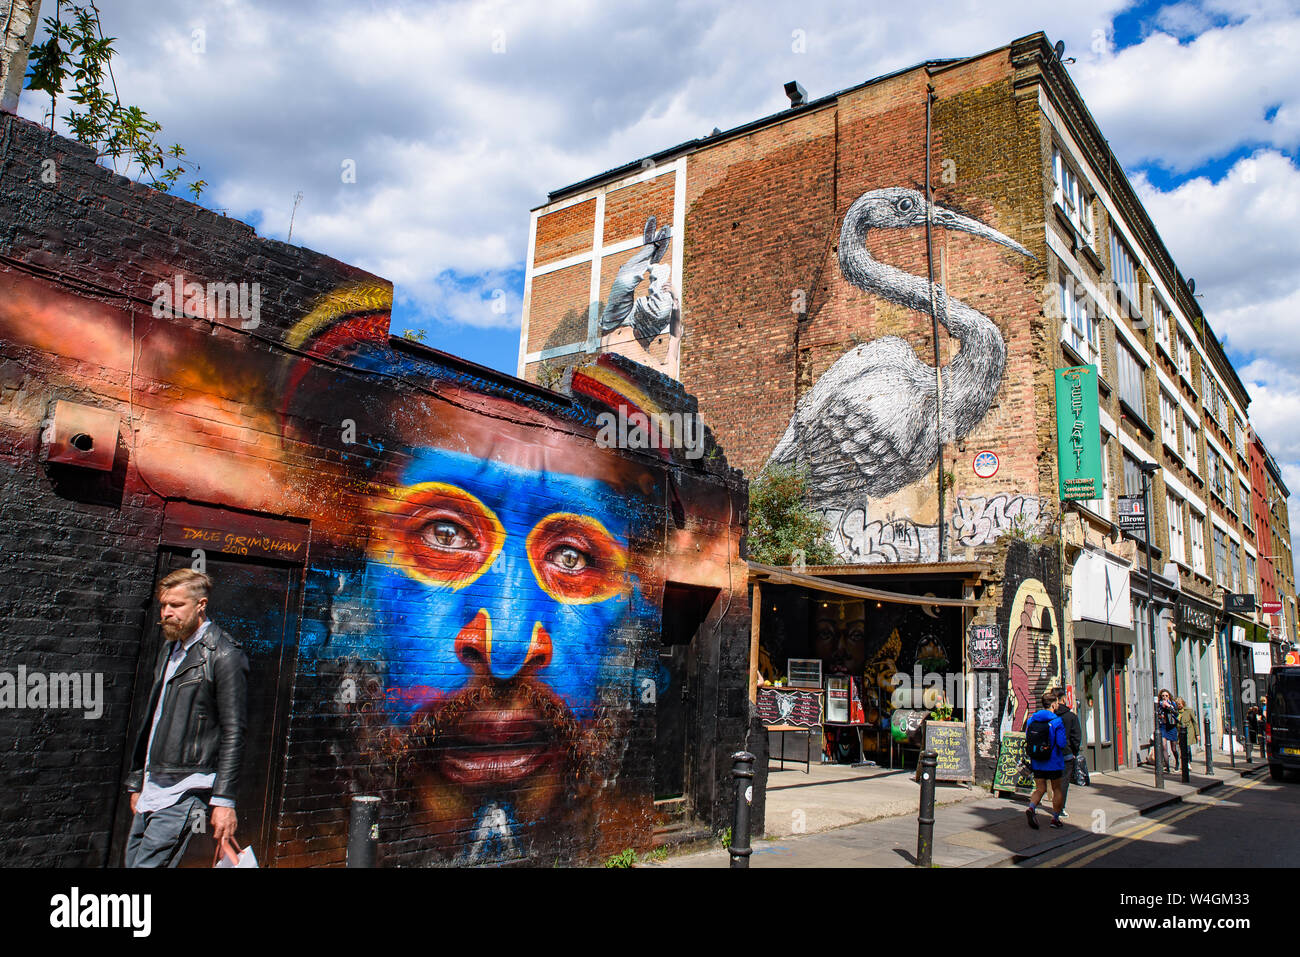 People passing by the graffiti wall art at Brick Lane Market in London, United Kingdom Stock Photo